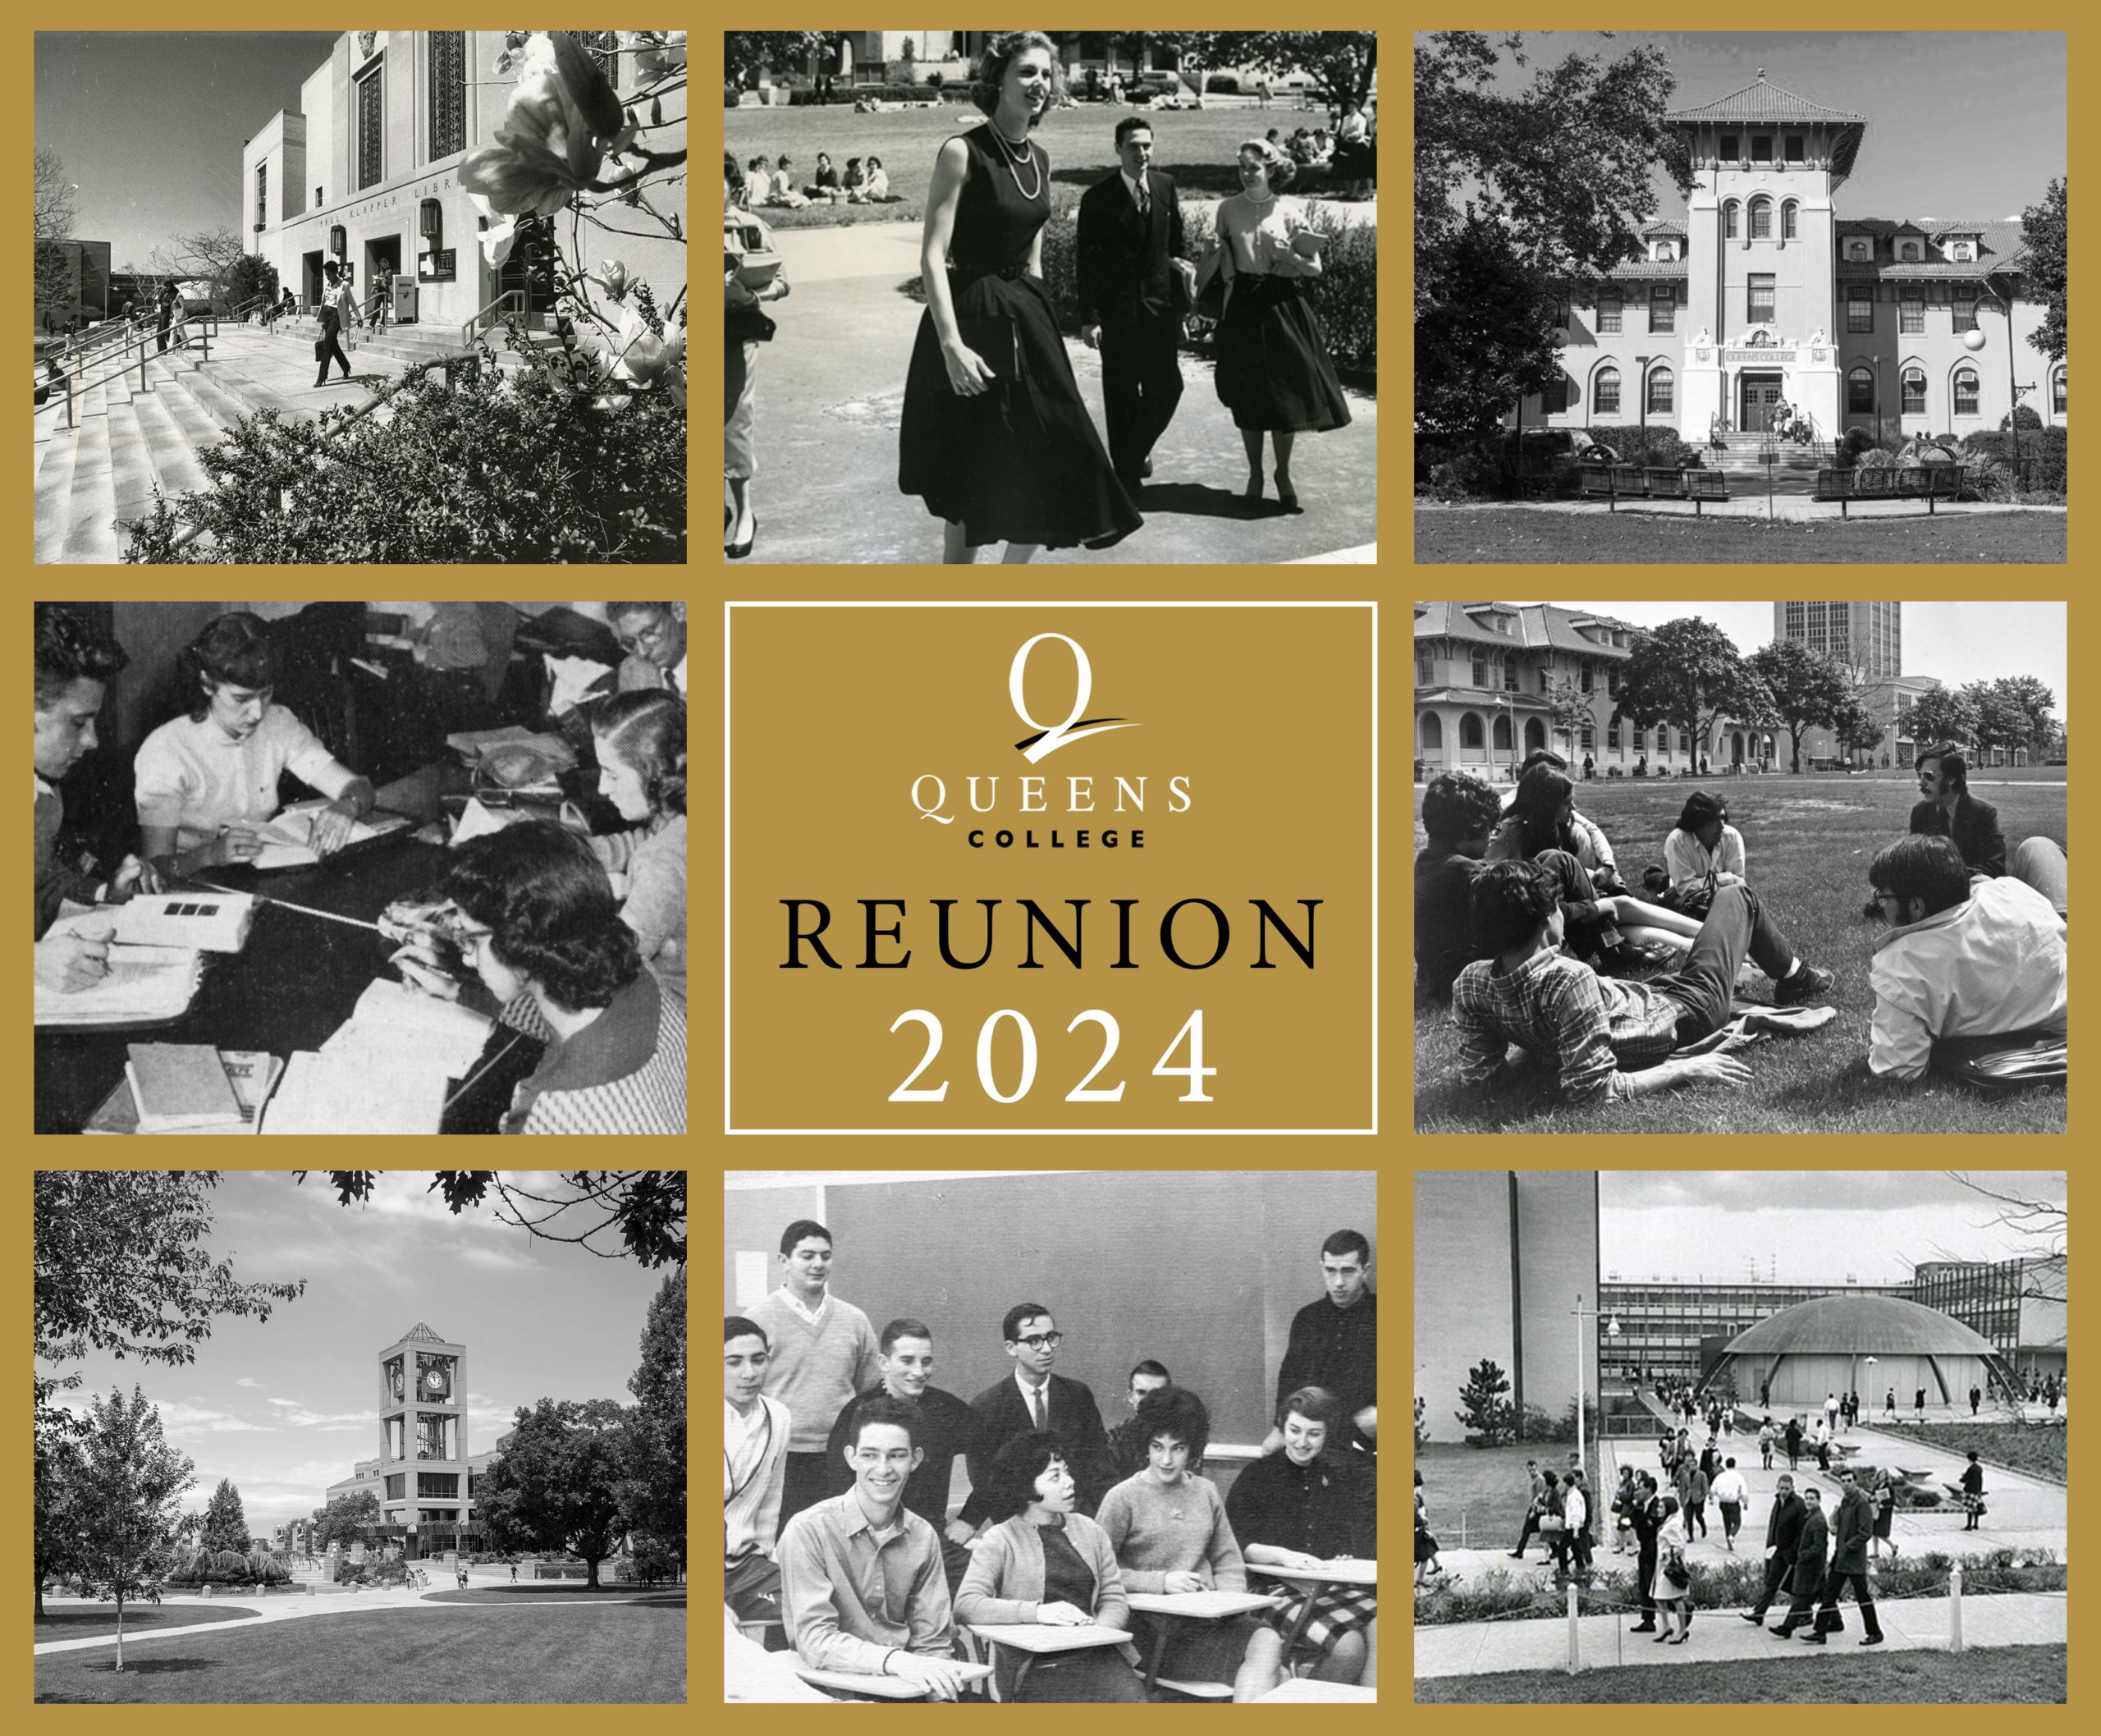 Reunion 2024